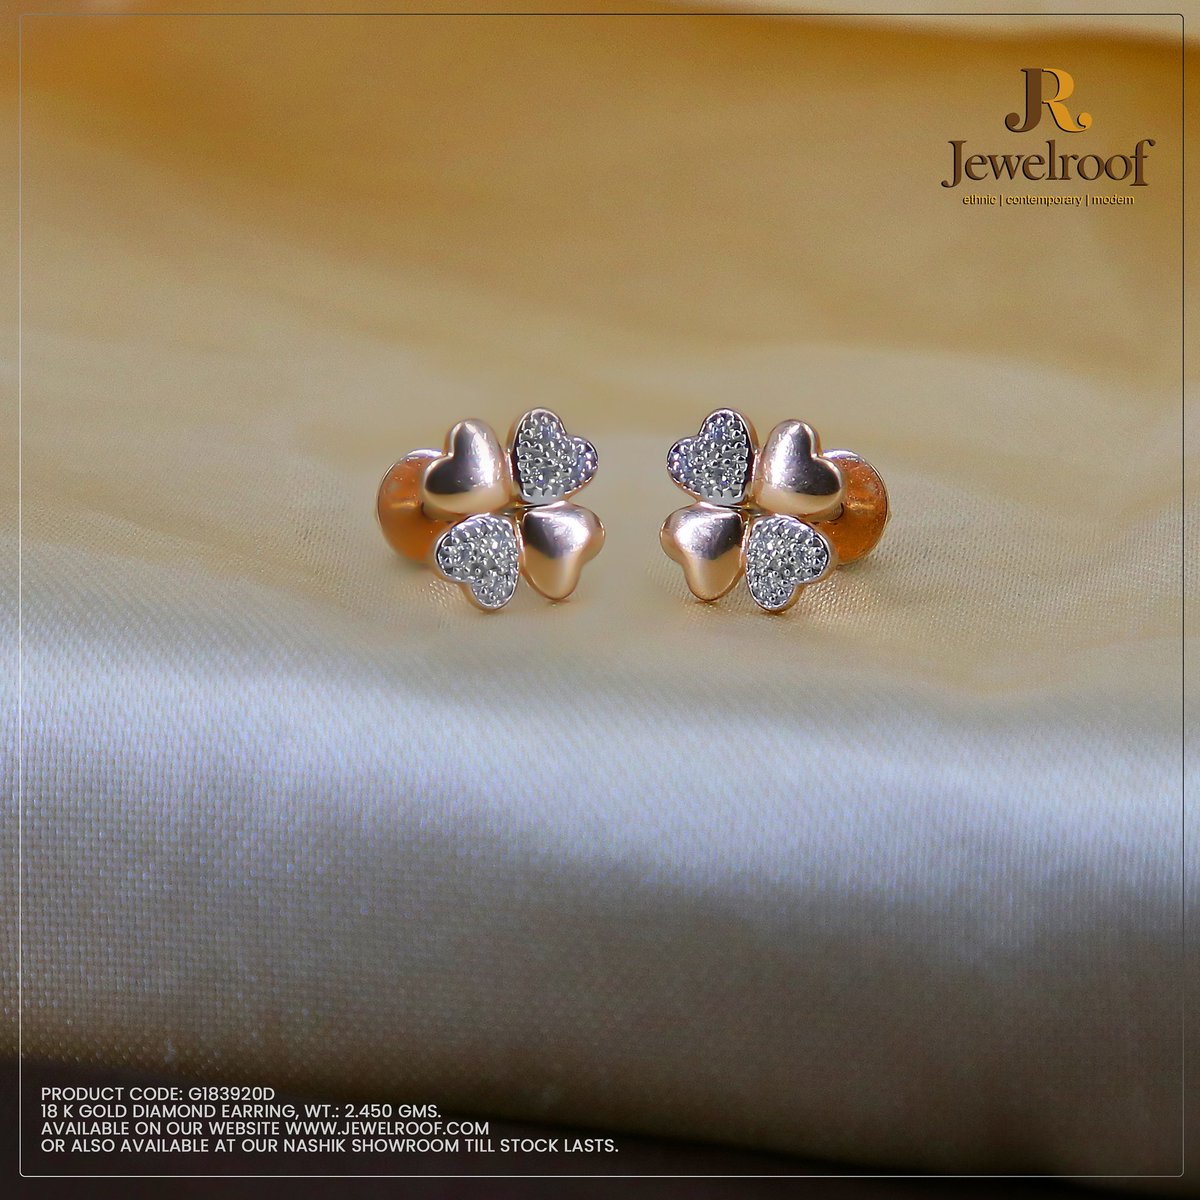 Shop these lovely earrings online from our website :
jewelroof.com

#rcbafnajewellers #jewelroof #rcbafna #rcbafnajewellersnashik #nashik #goldjewellery #rosegold #goldring #diamondjewellery #womensjewellery #beautifulearrings #earrings #earringsoftheday